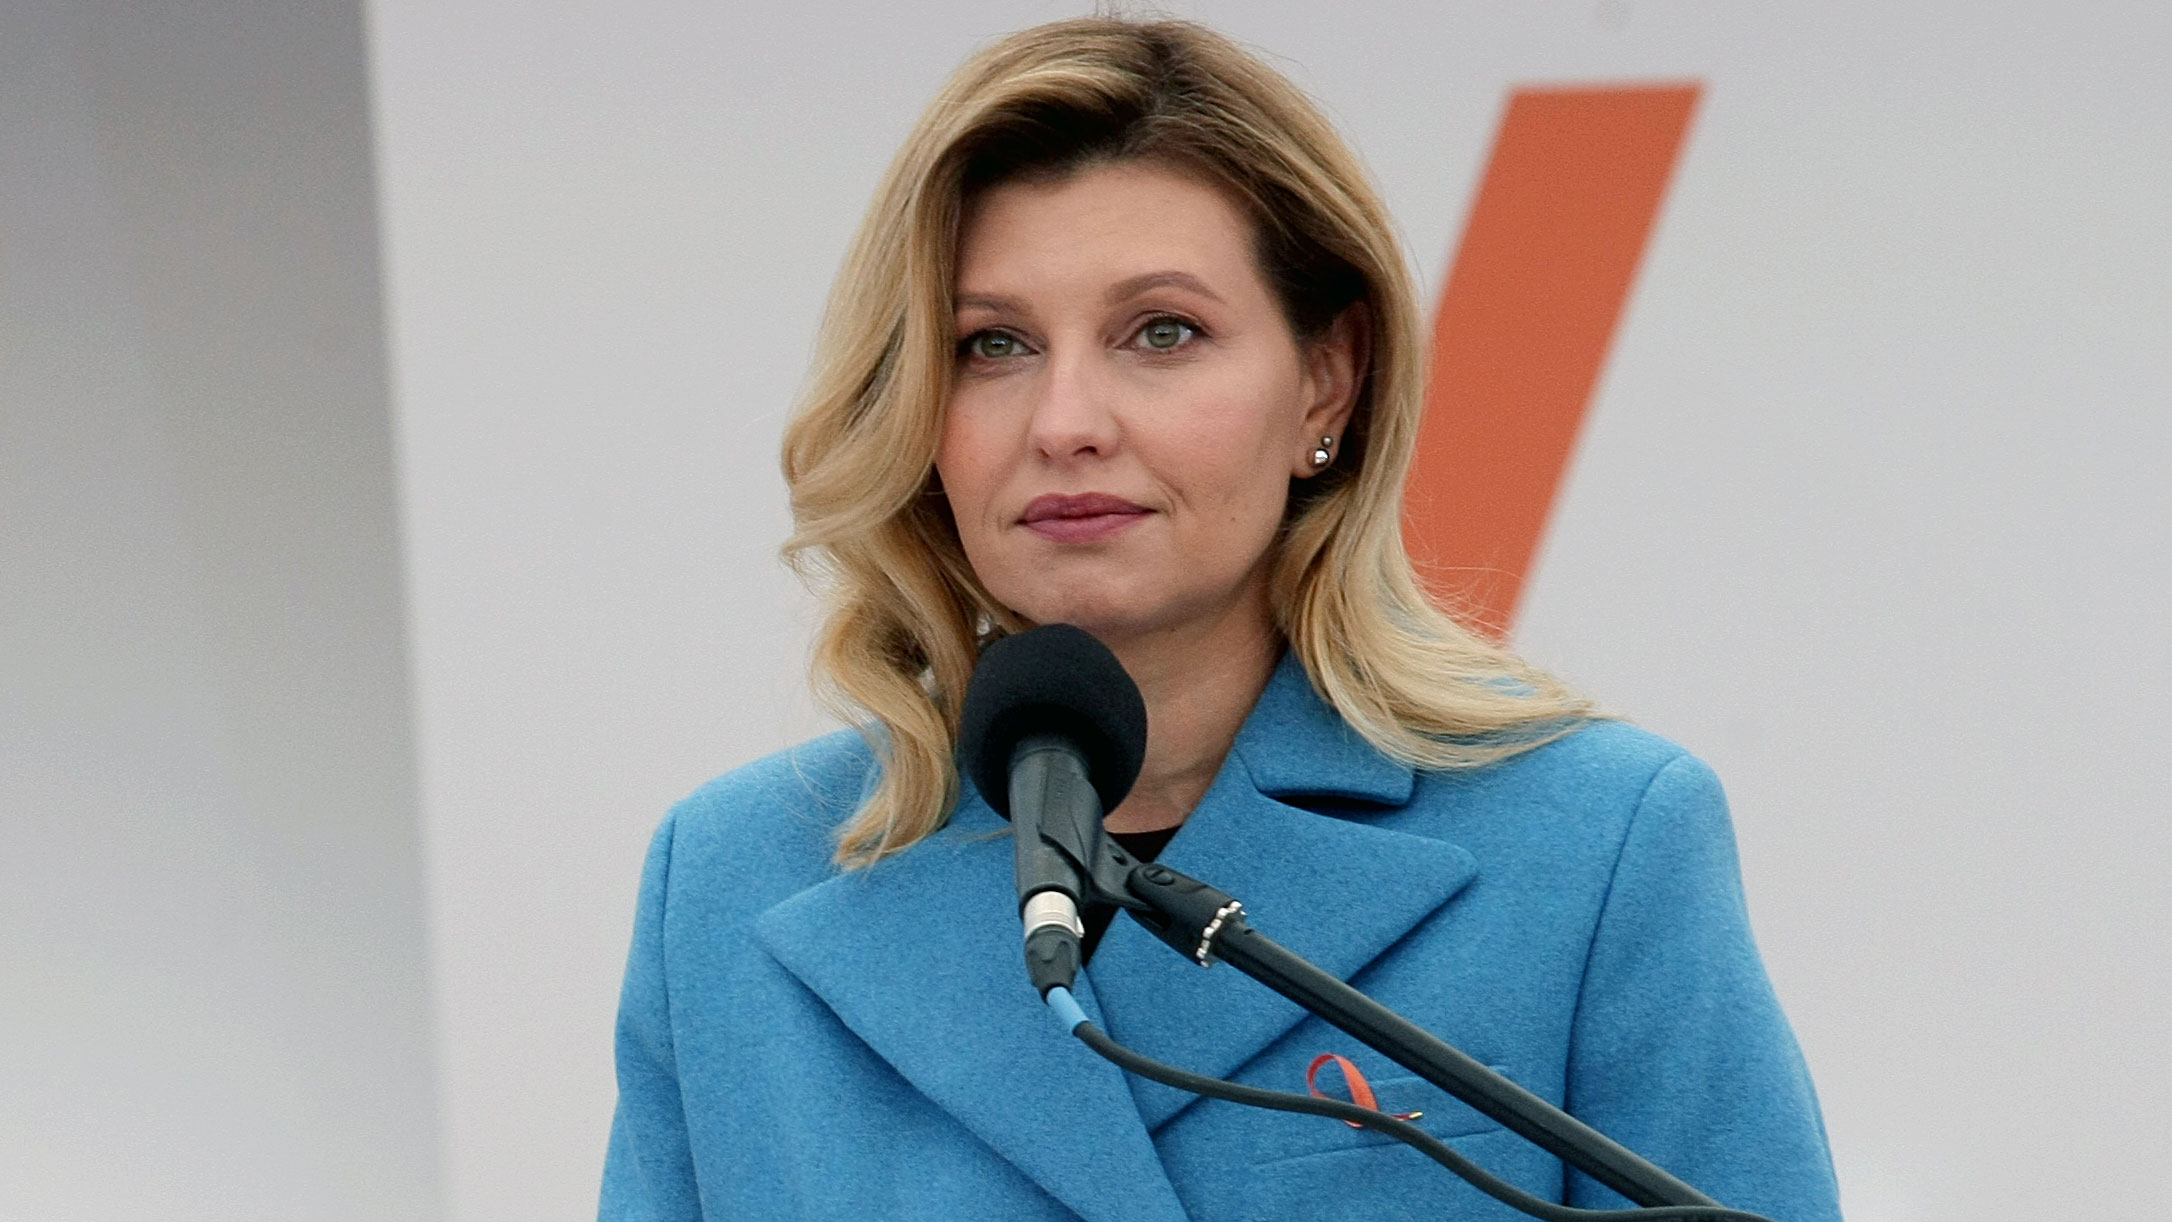 Olena Zelenska speaks at an event in Kyiv in November 2020.